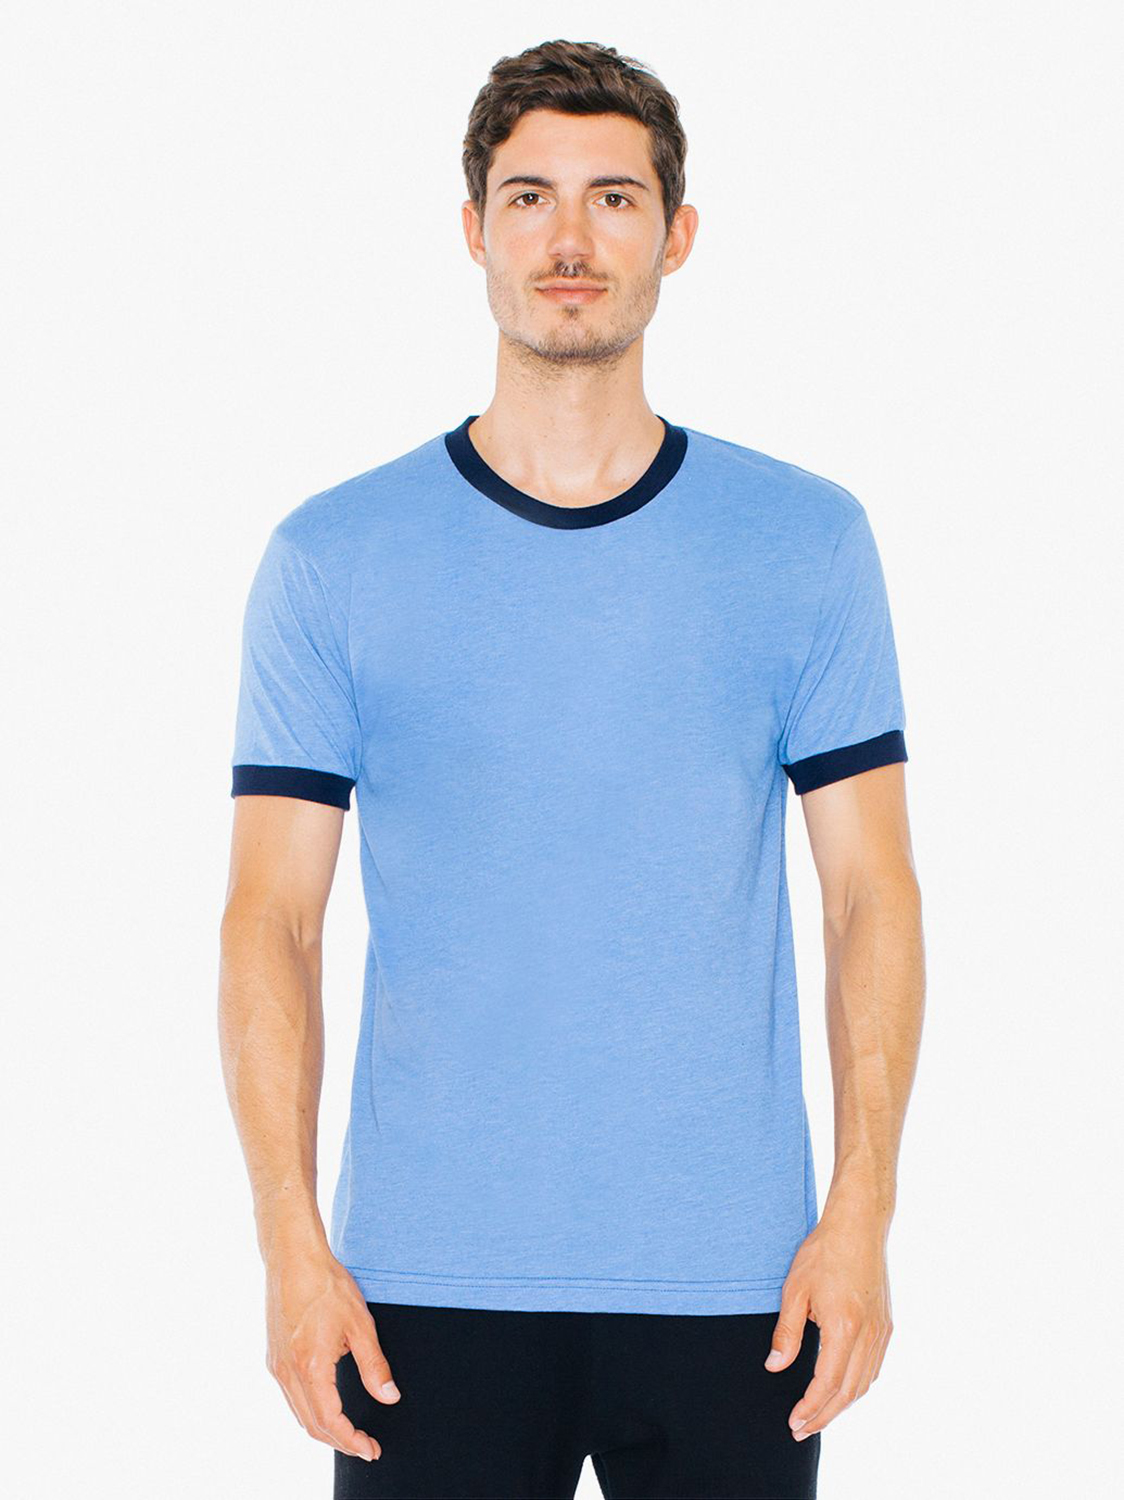 BB410W American Apparel UNISEX Poly-Cotton Short-Sleeve Ringer T-Shirt